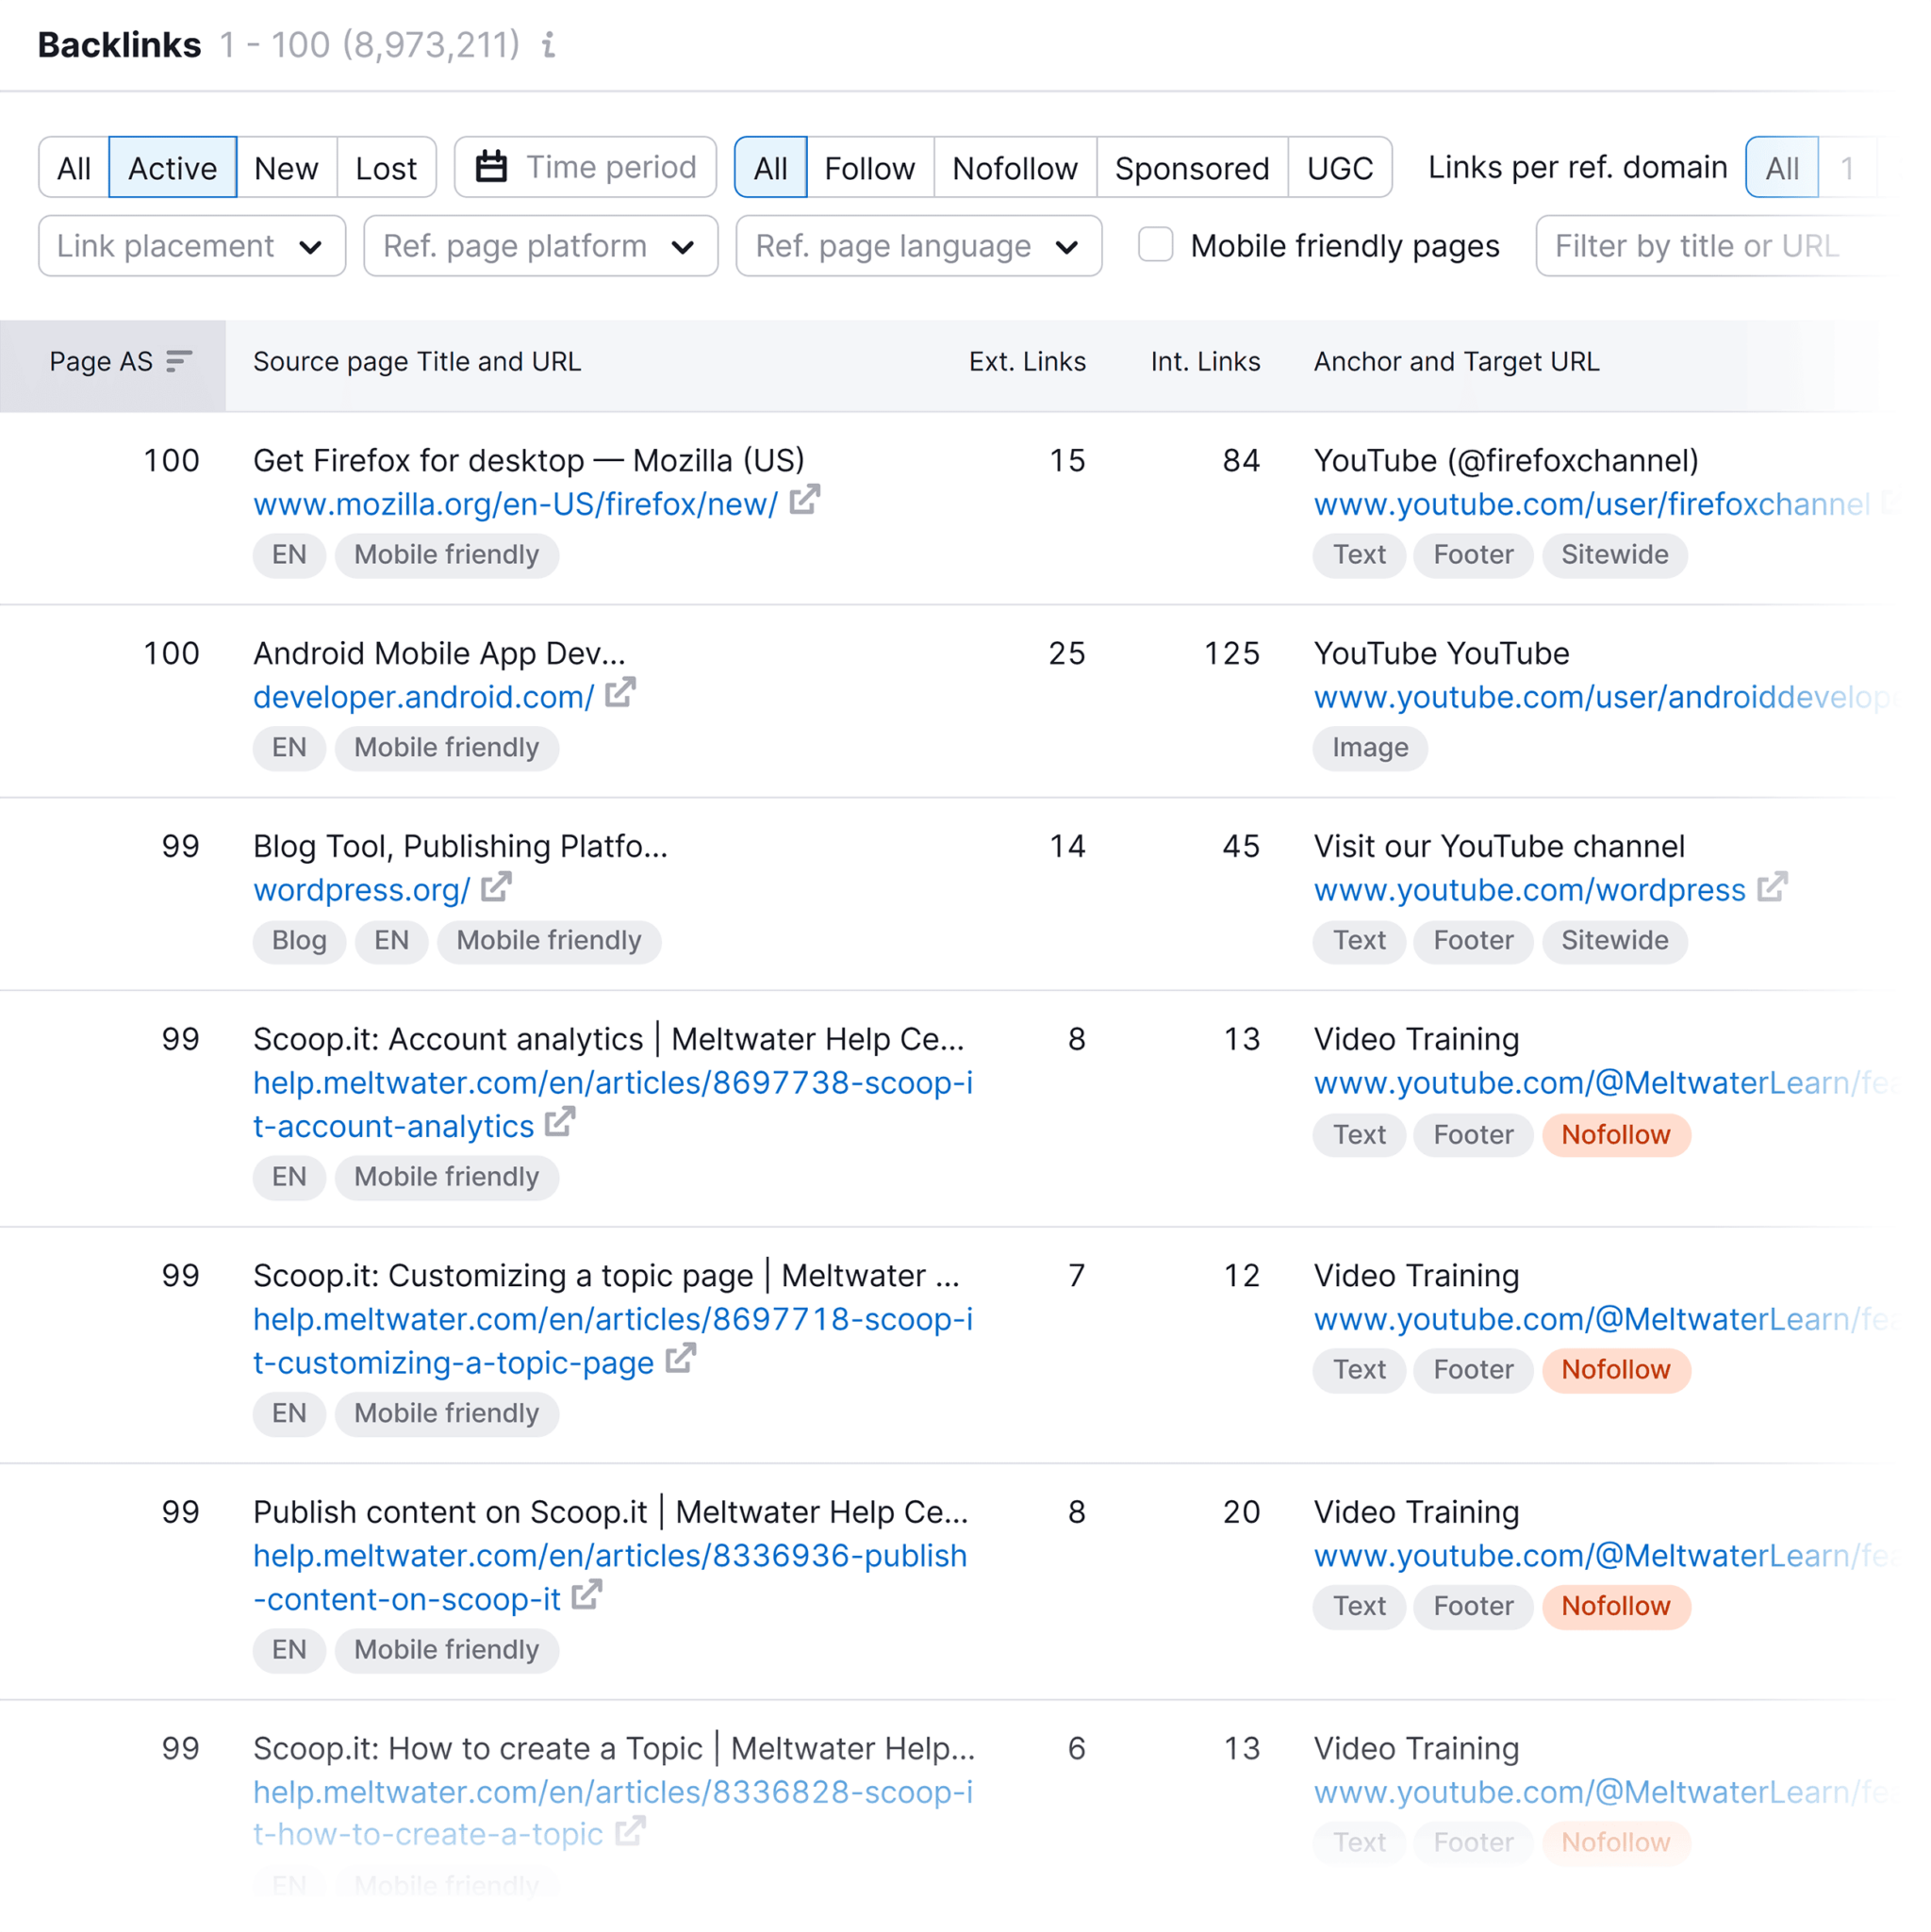 backlink-analytics-backlinks 29 Top Digital Marketing Tools for Every Budget